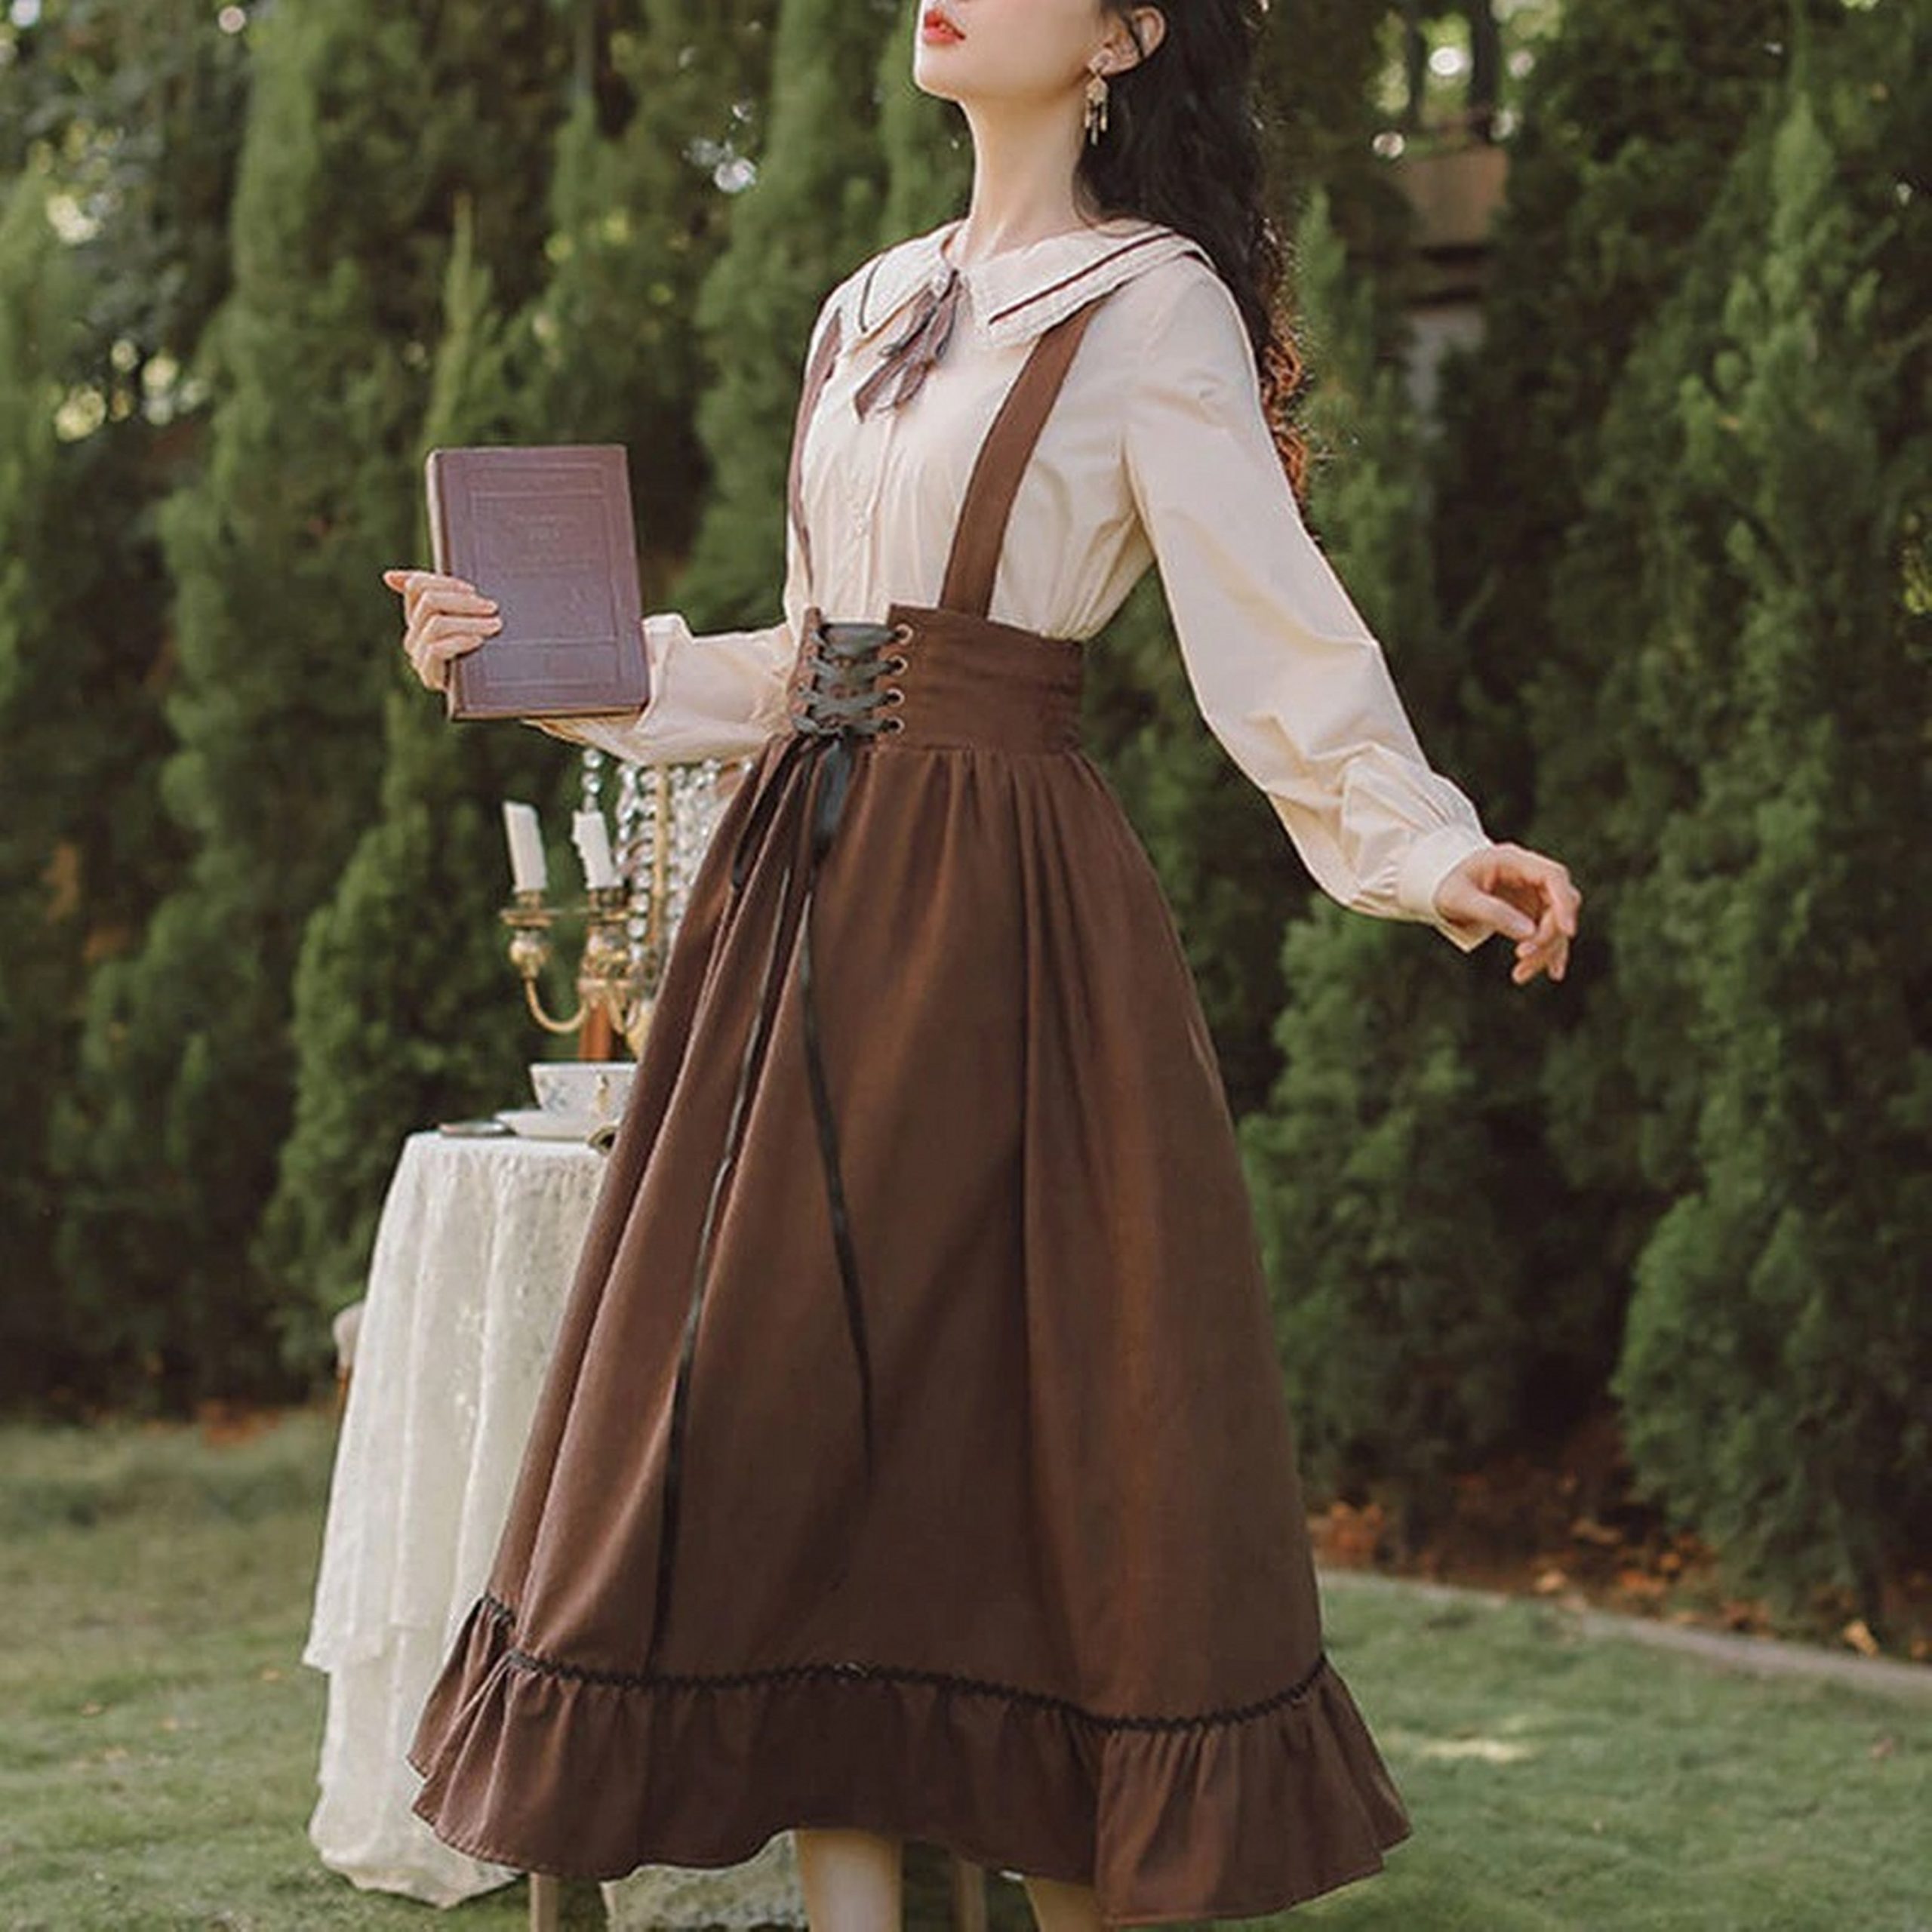 Dark Academia Clothing Long Midi Suspender Renaissance Skirt Cottage Core Clothing Cute High Waist Ruffle A Line Skirts